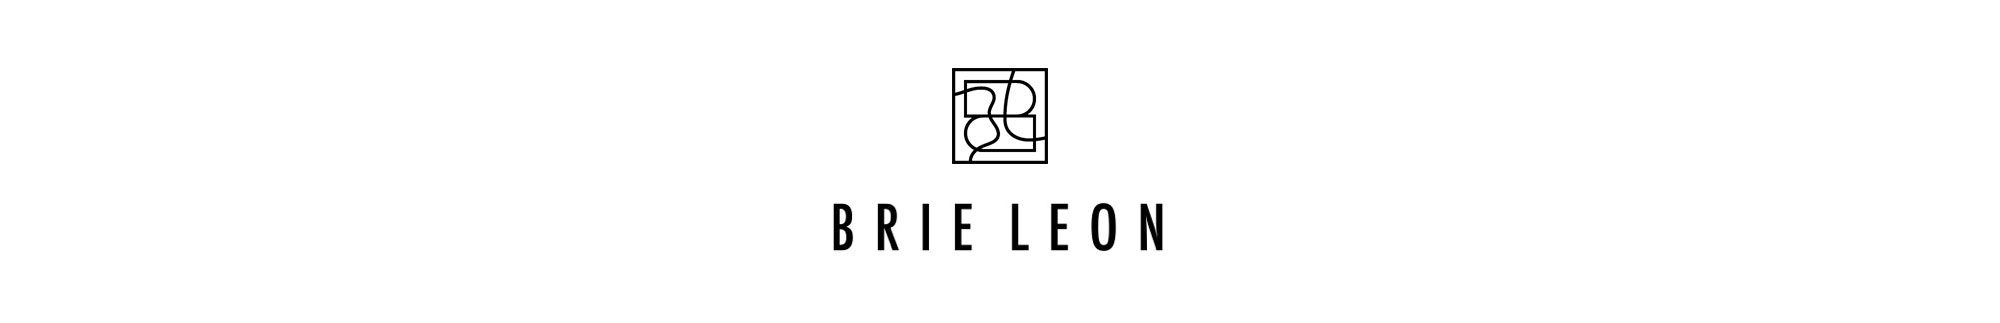 BRIE_LEON